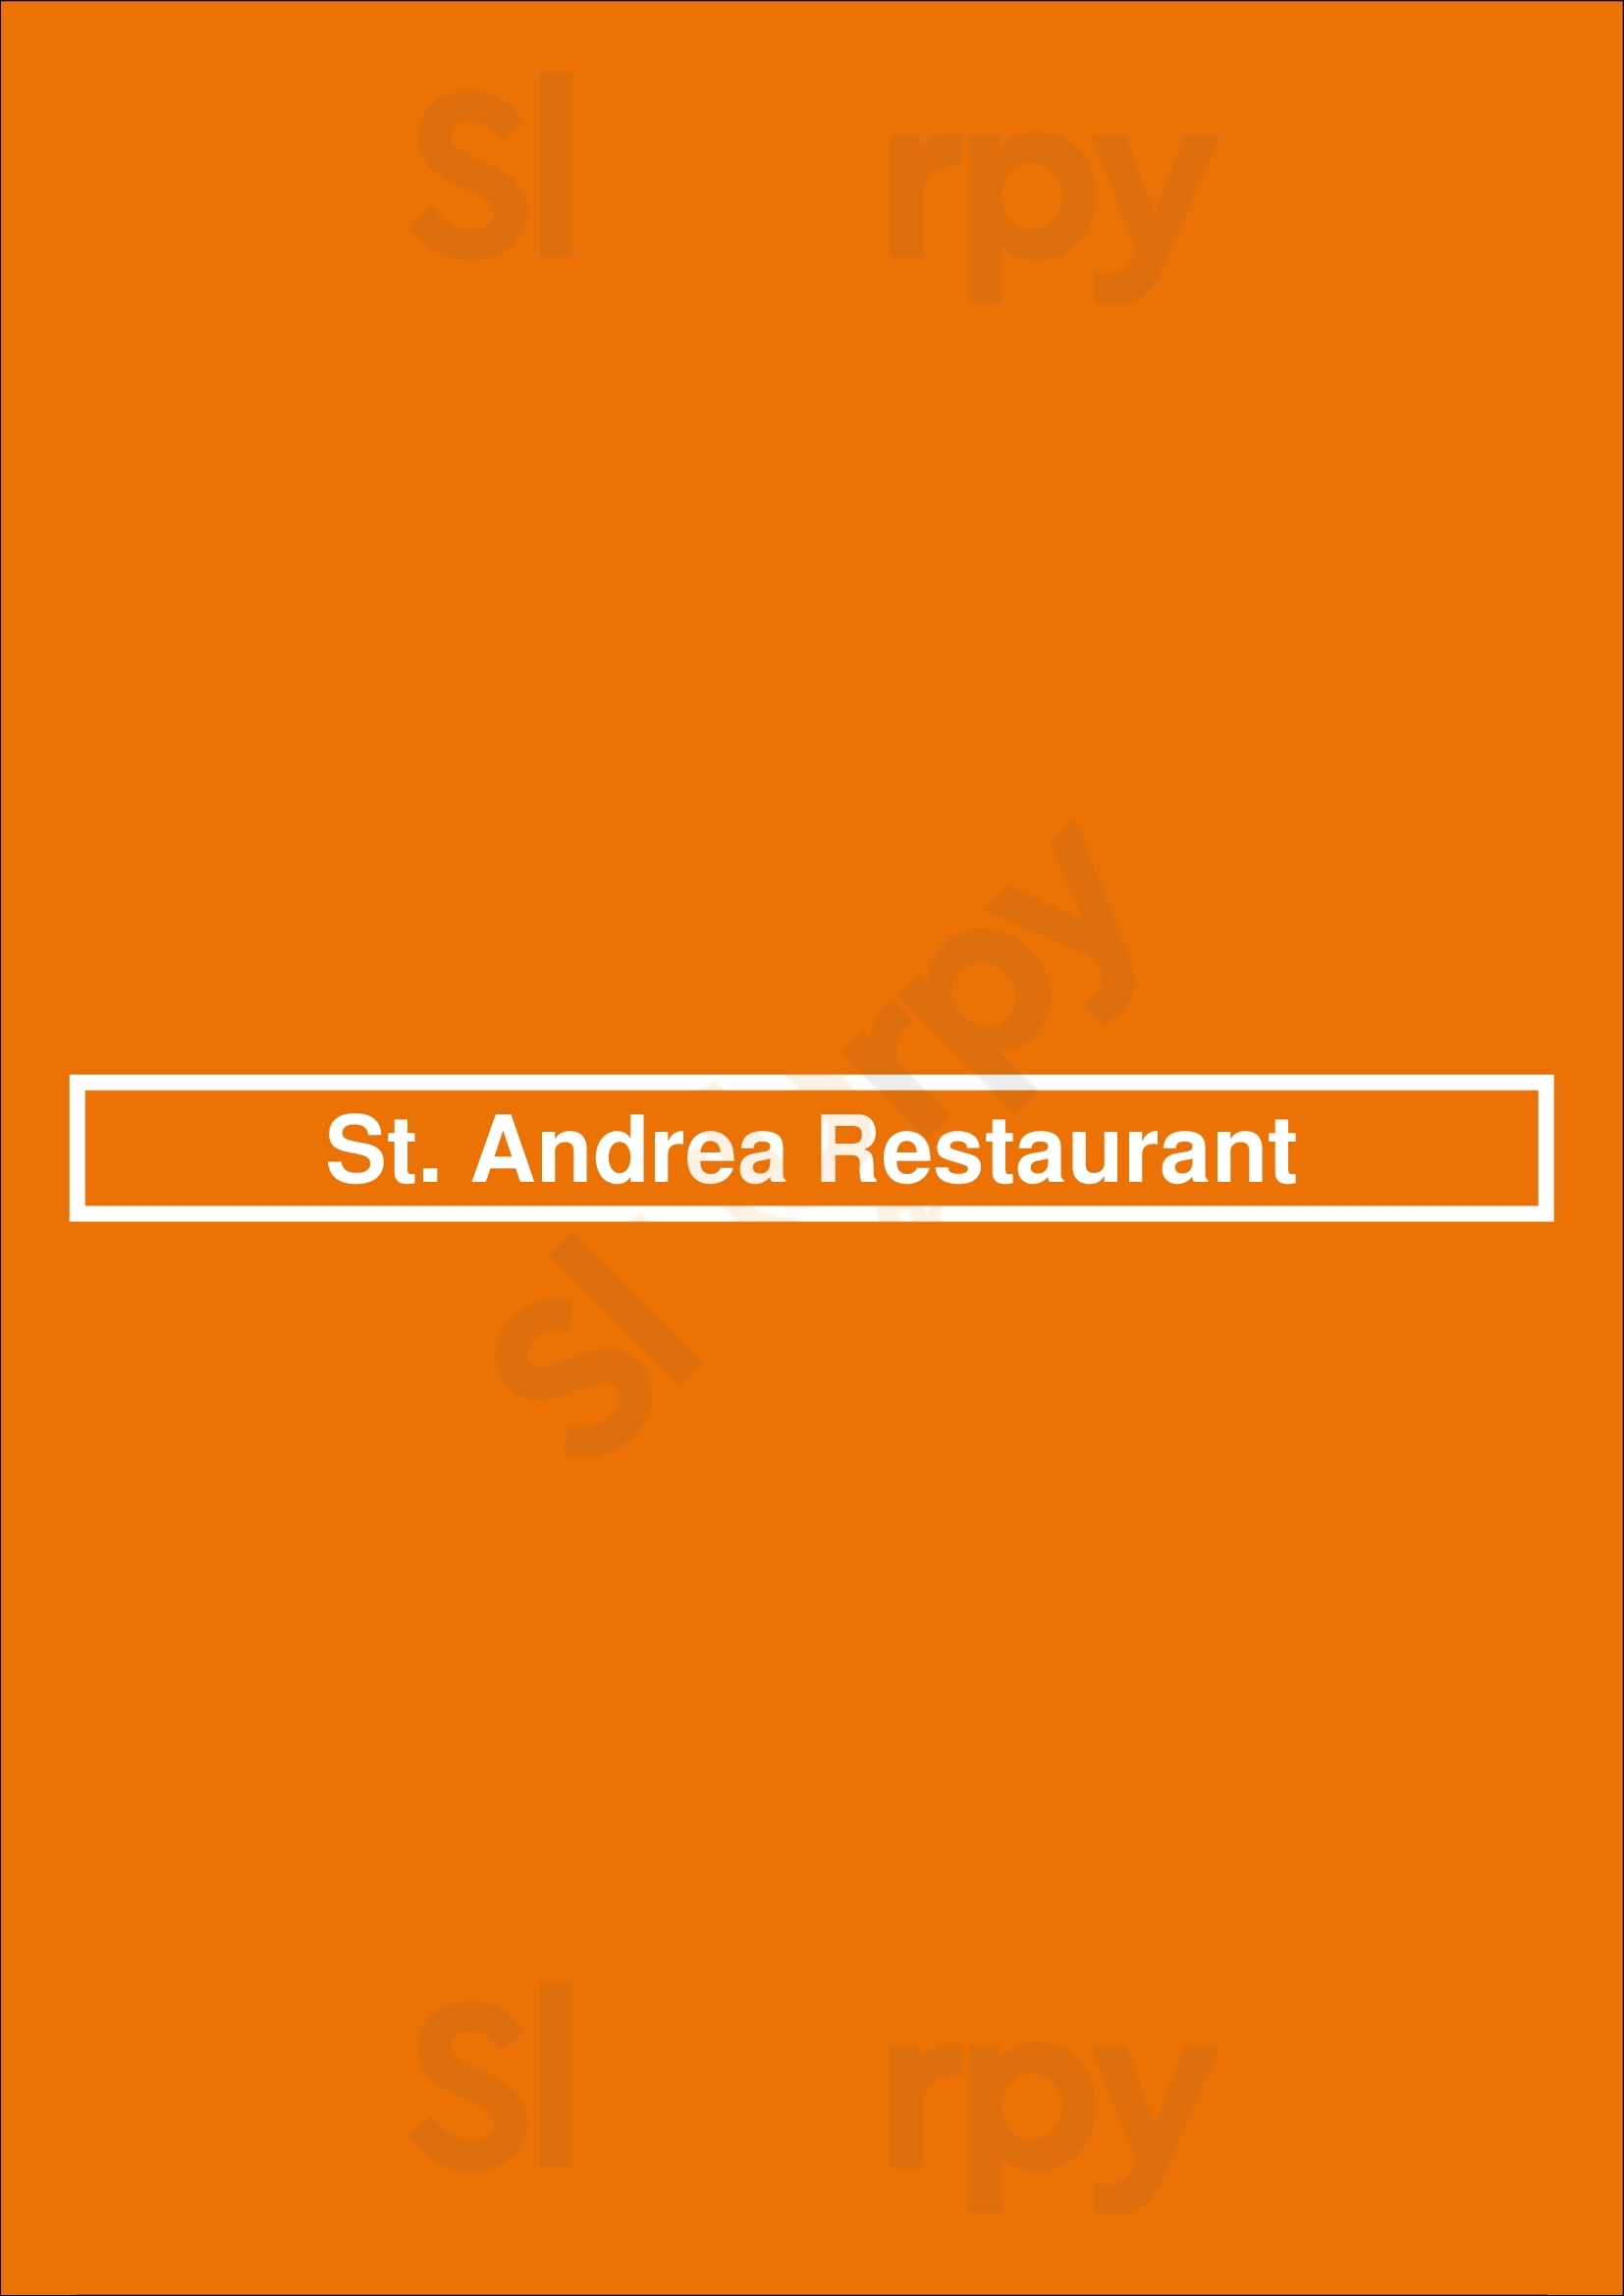 St. Andrea Restaurant Budapest Menu - 1